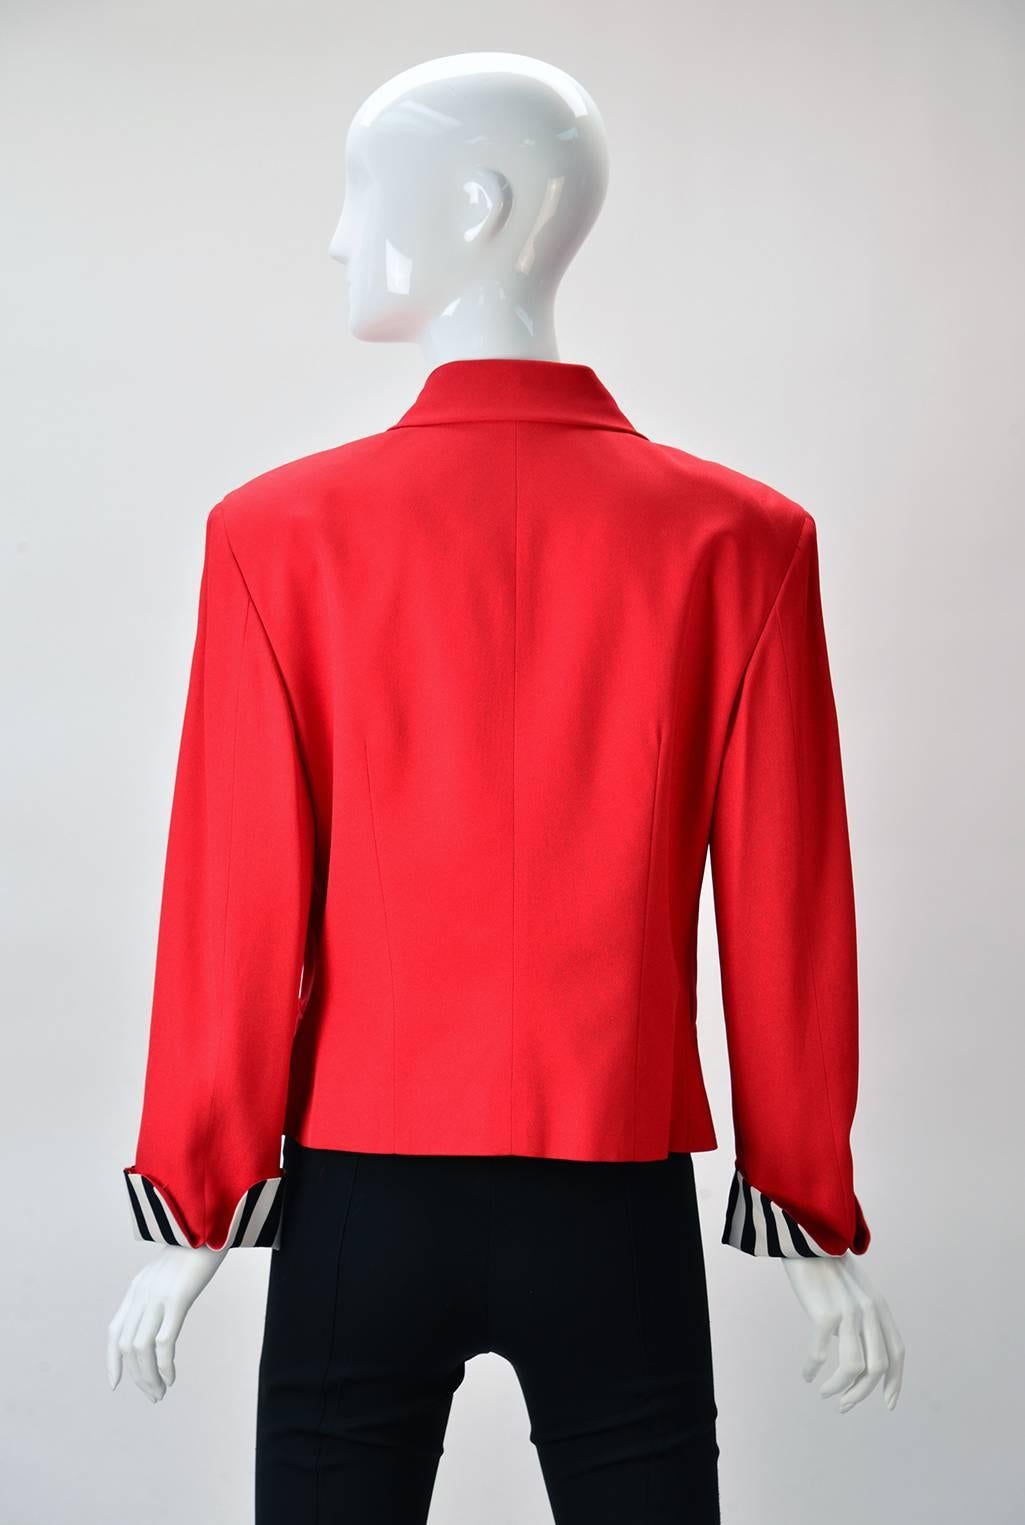 red black and white blazer